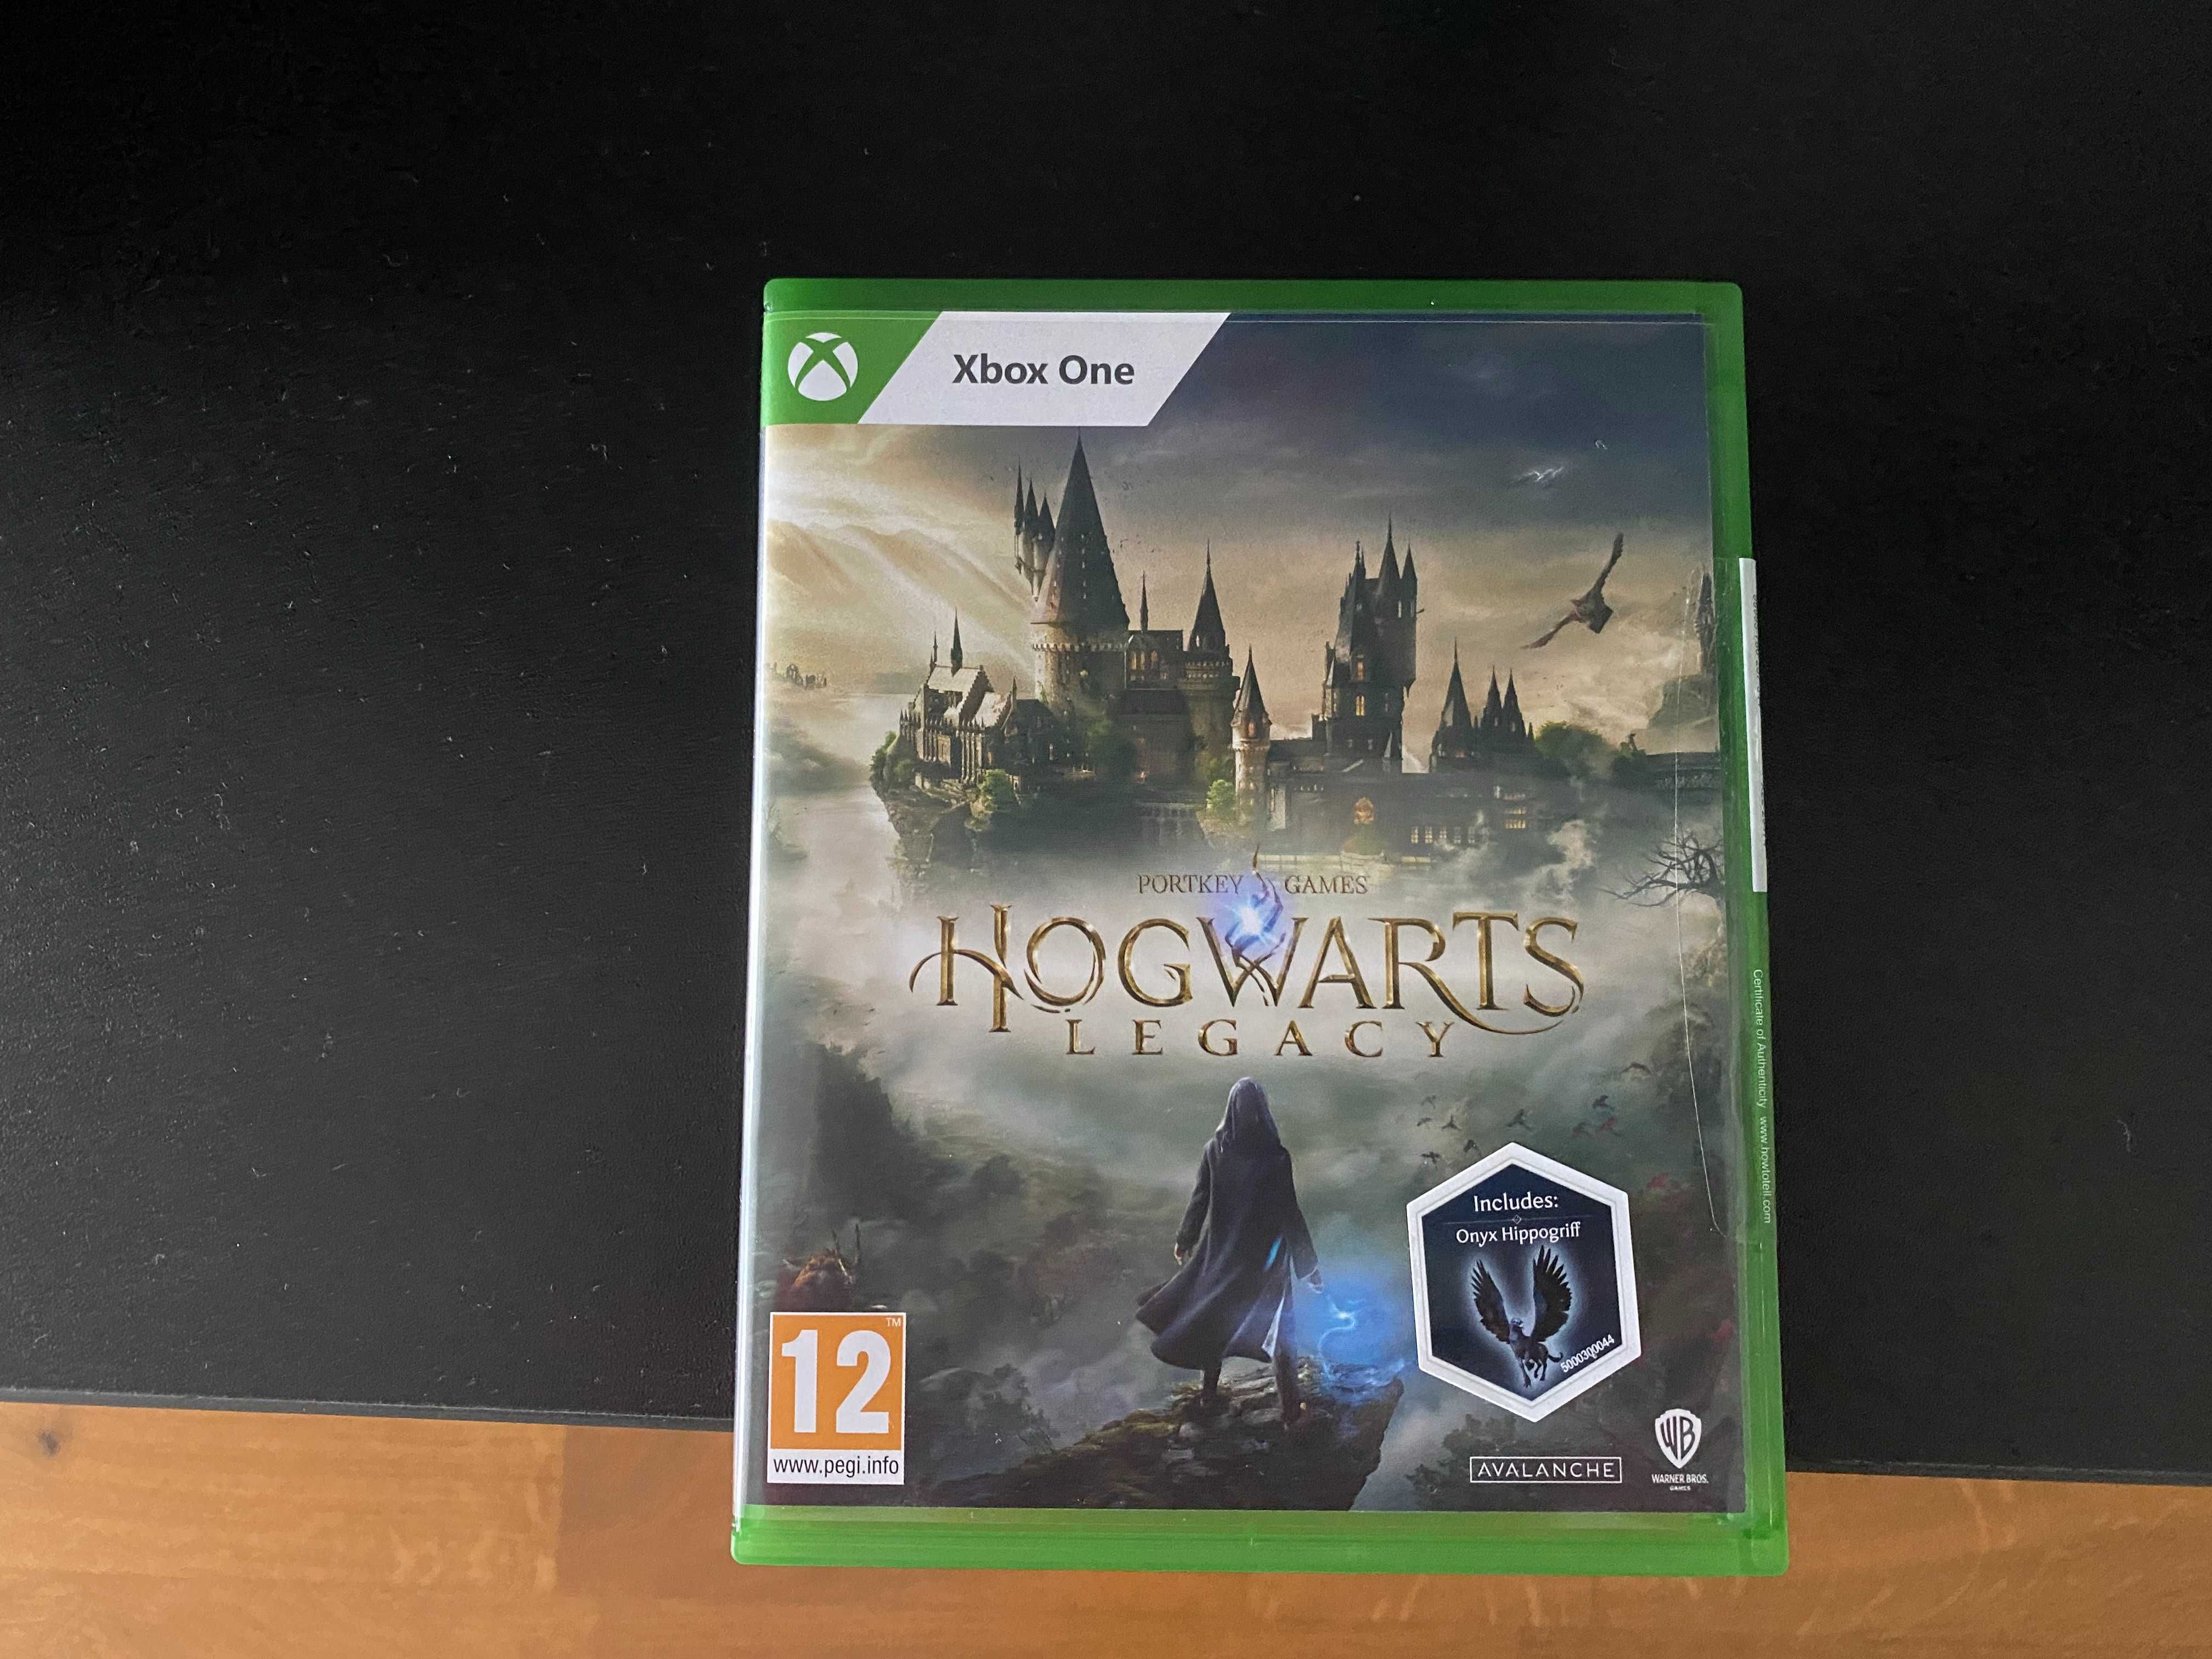 Hogwarts legacy Xbox One/Series X